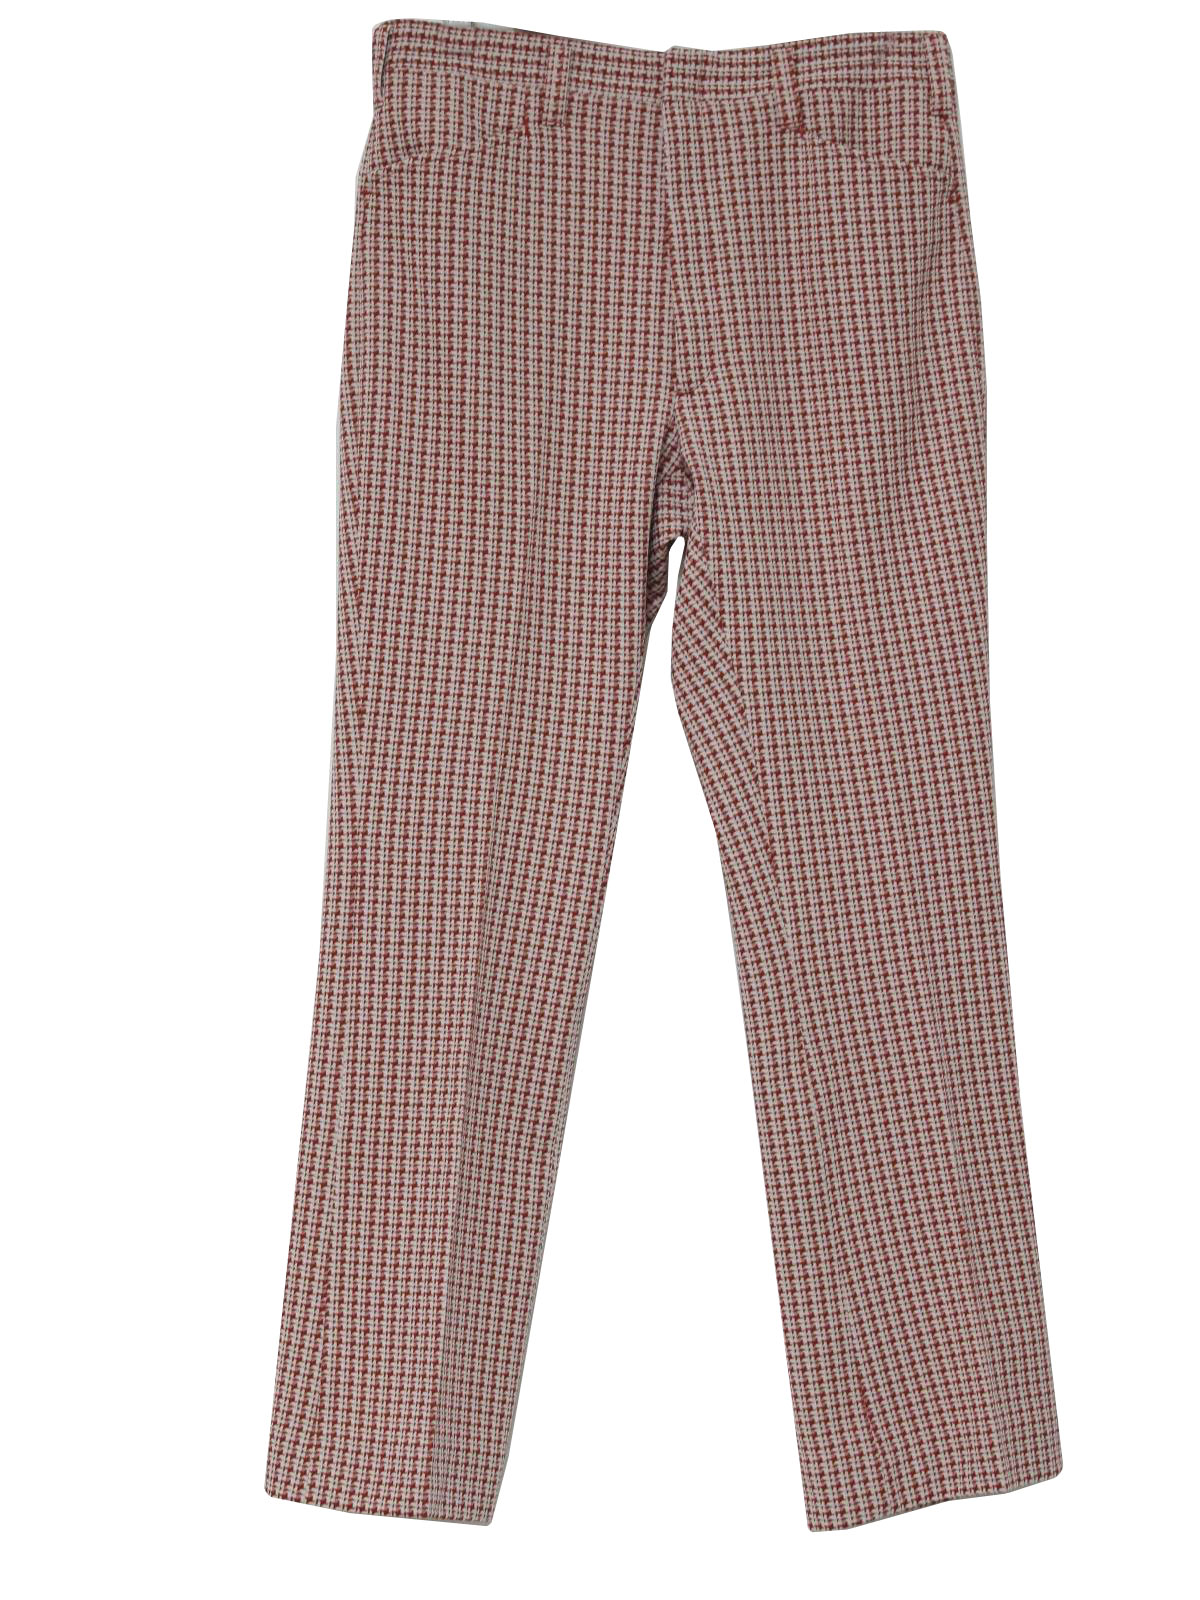 70s Retro Pants: 70s -Haggar Slacks- Mens red and white abstract print ...